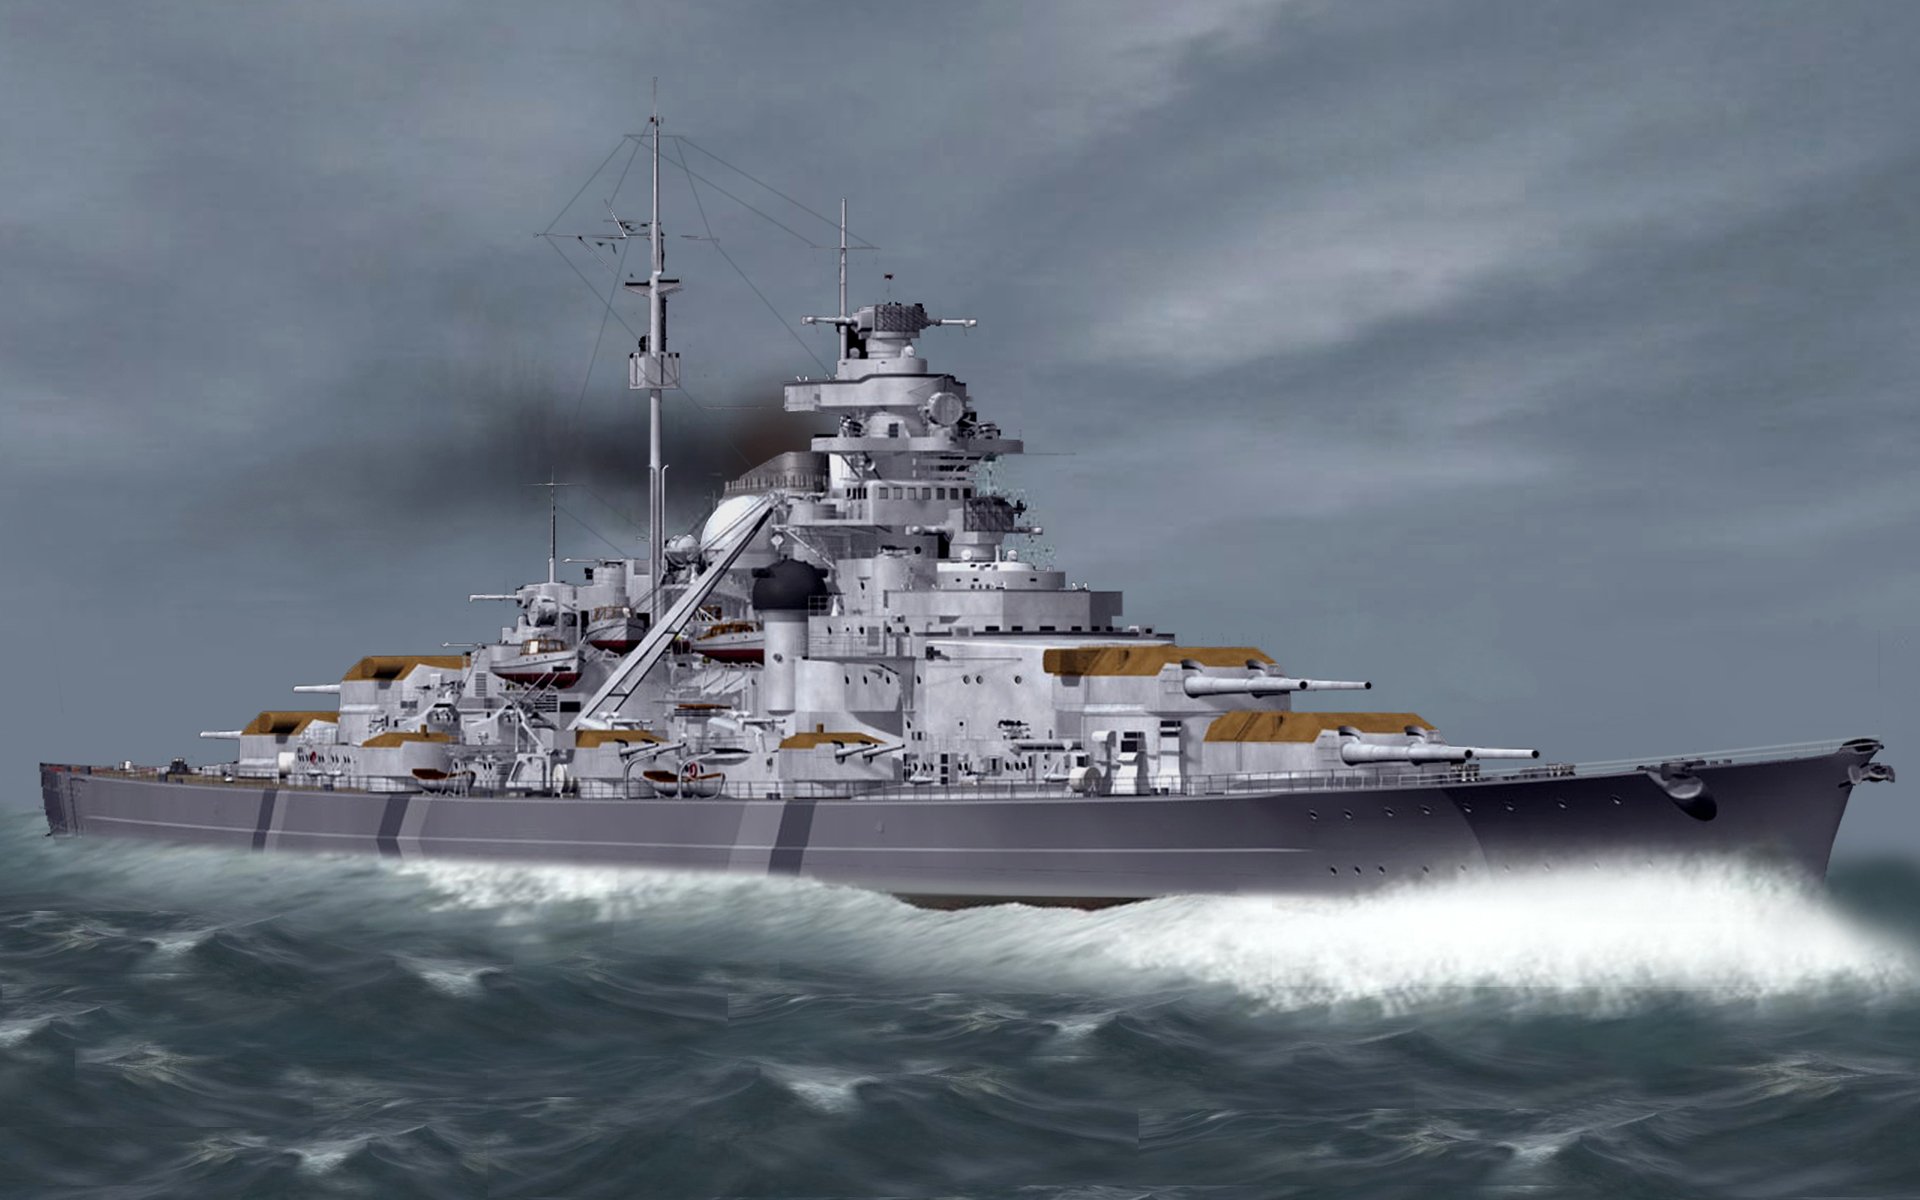 German battleship Bismarck Full HD Wallpaper and